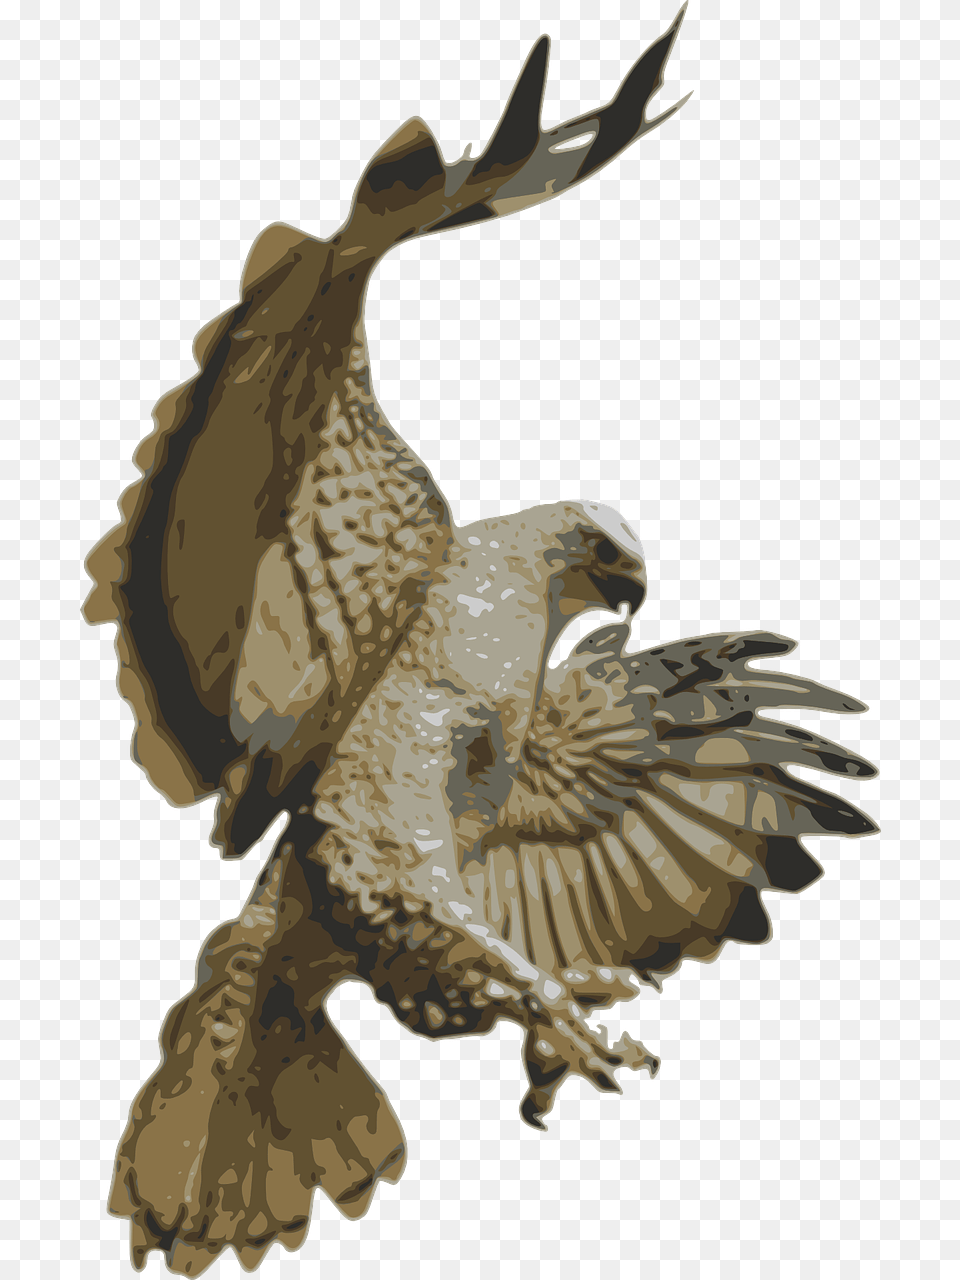 Hawk, Animal, Bird, Buzzard, Kite Bird Png Image